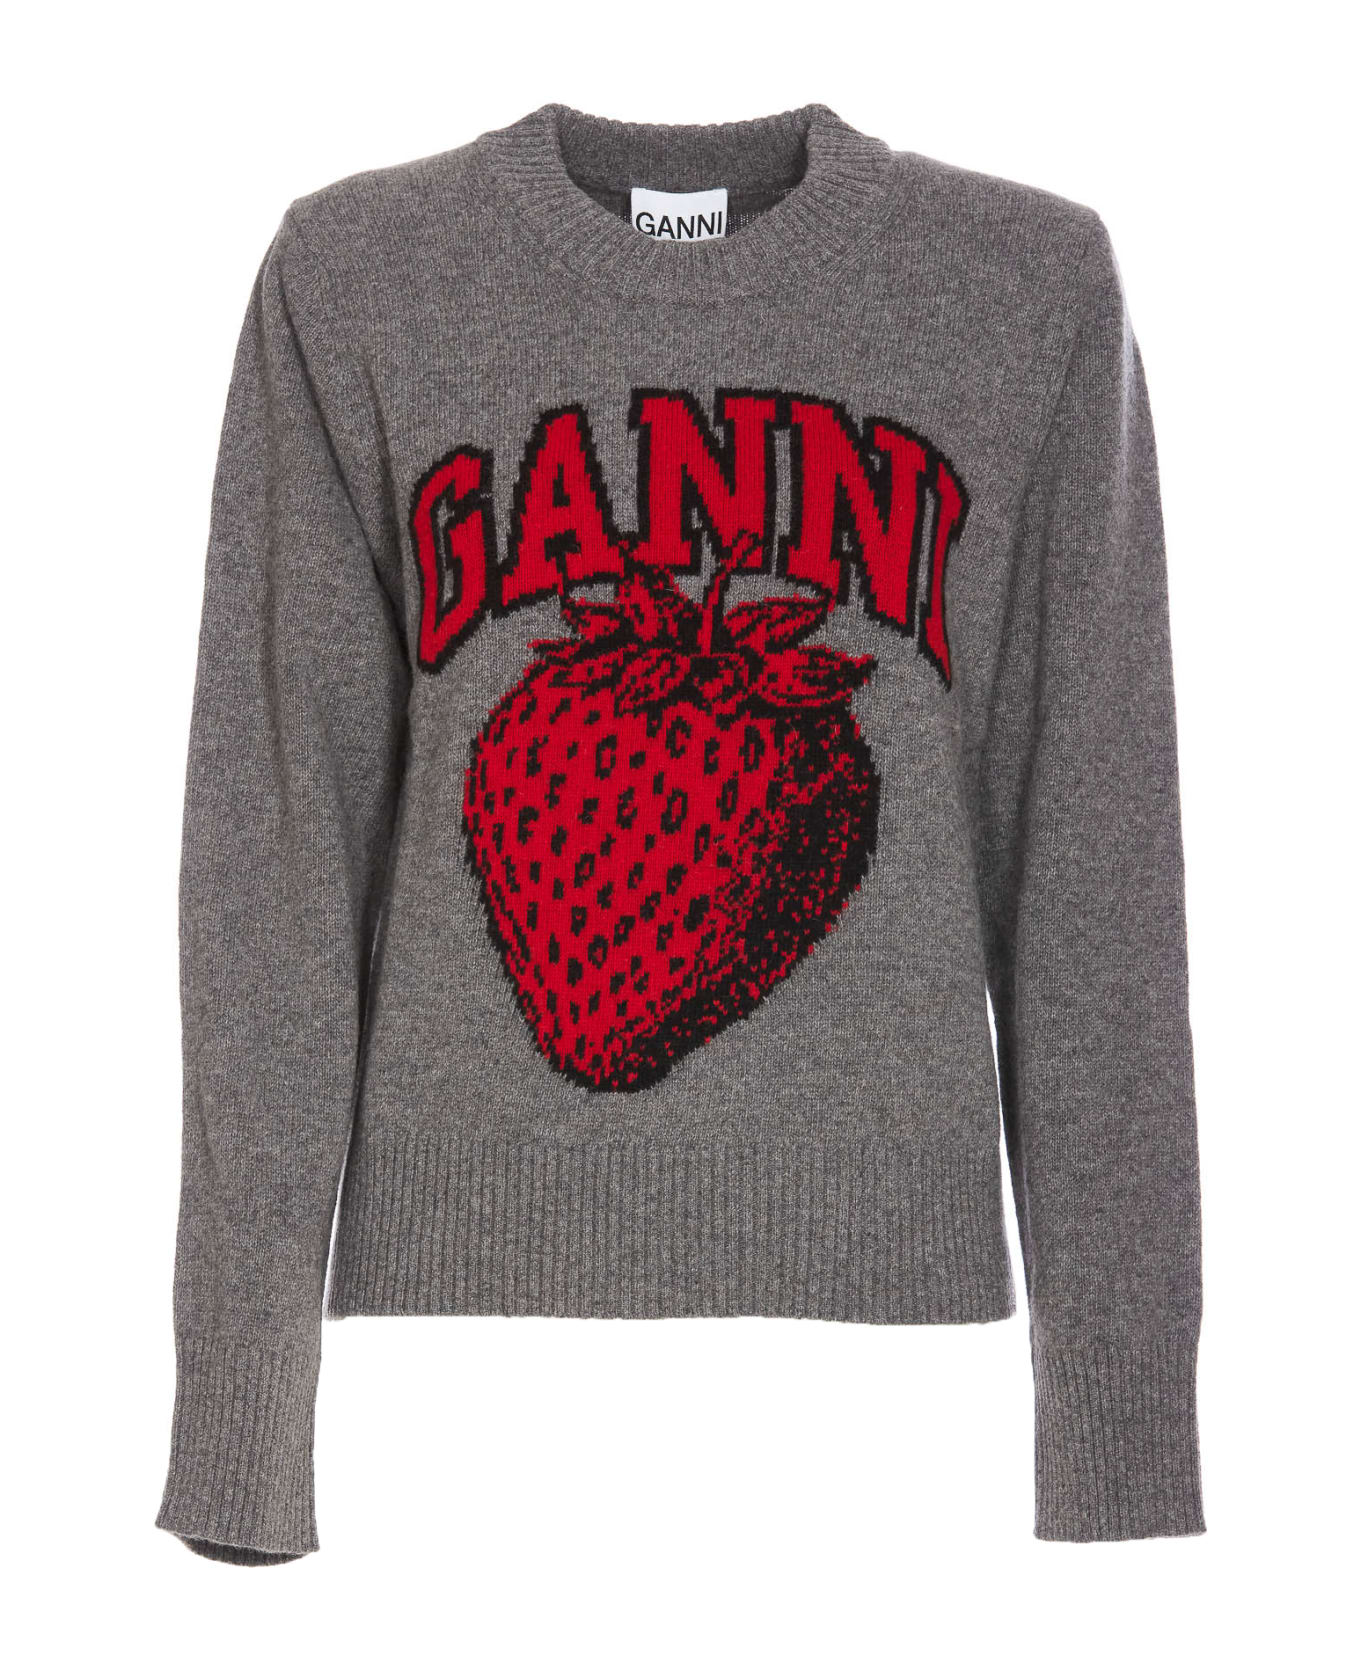 Ganni Grey Wool Blend Sweater - Gray ニットウェア